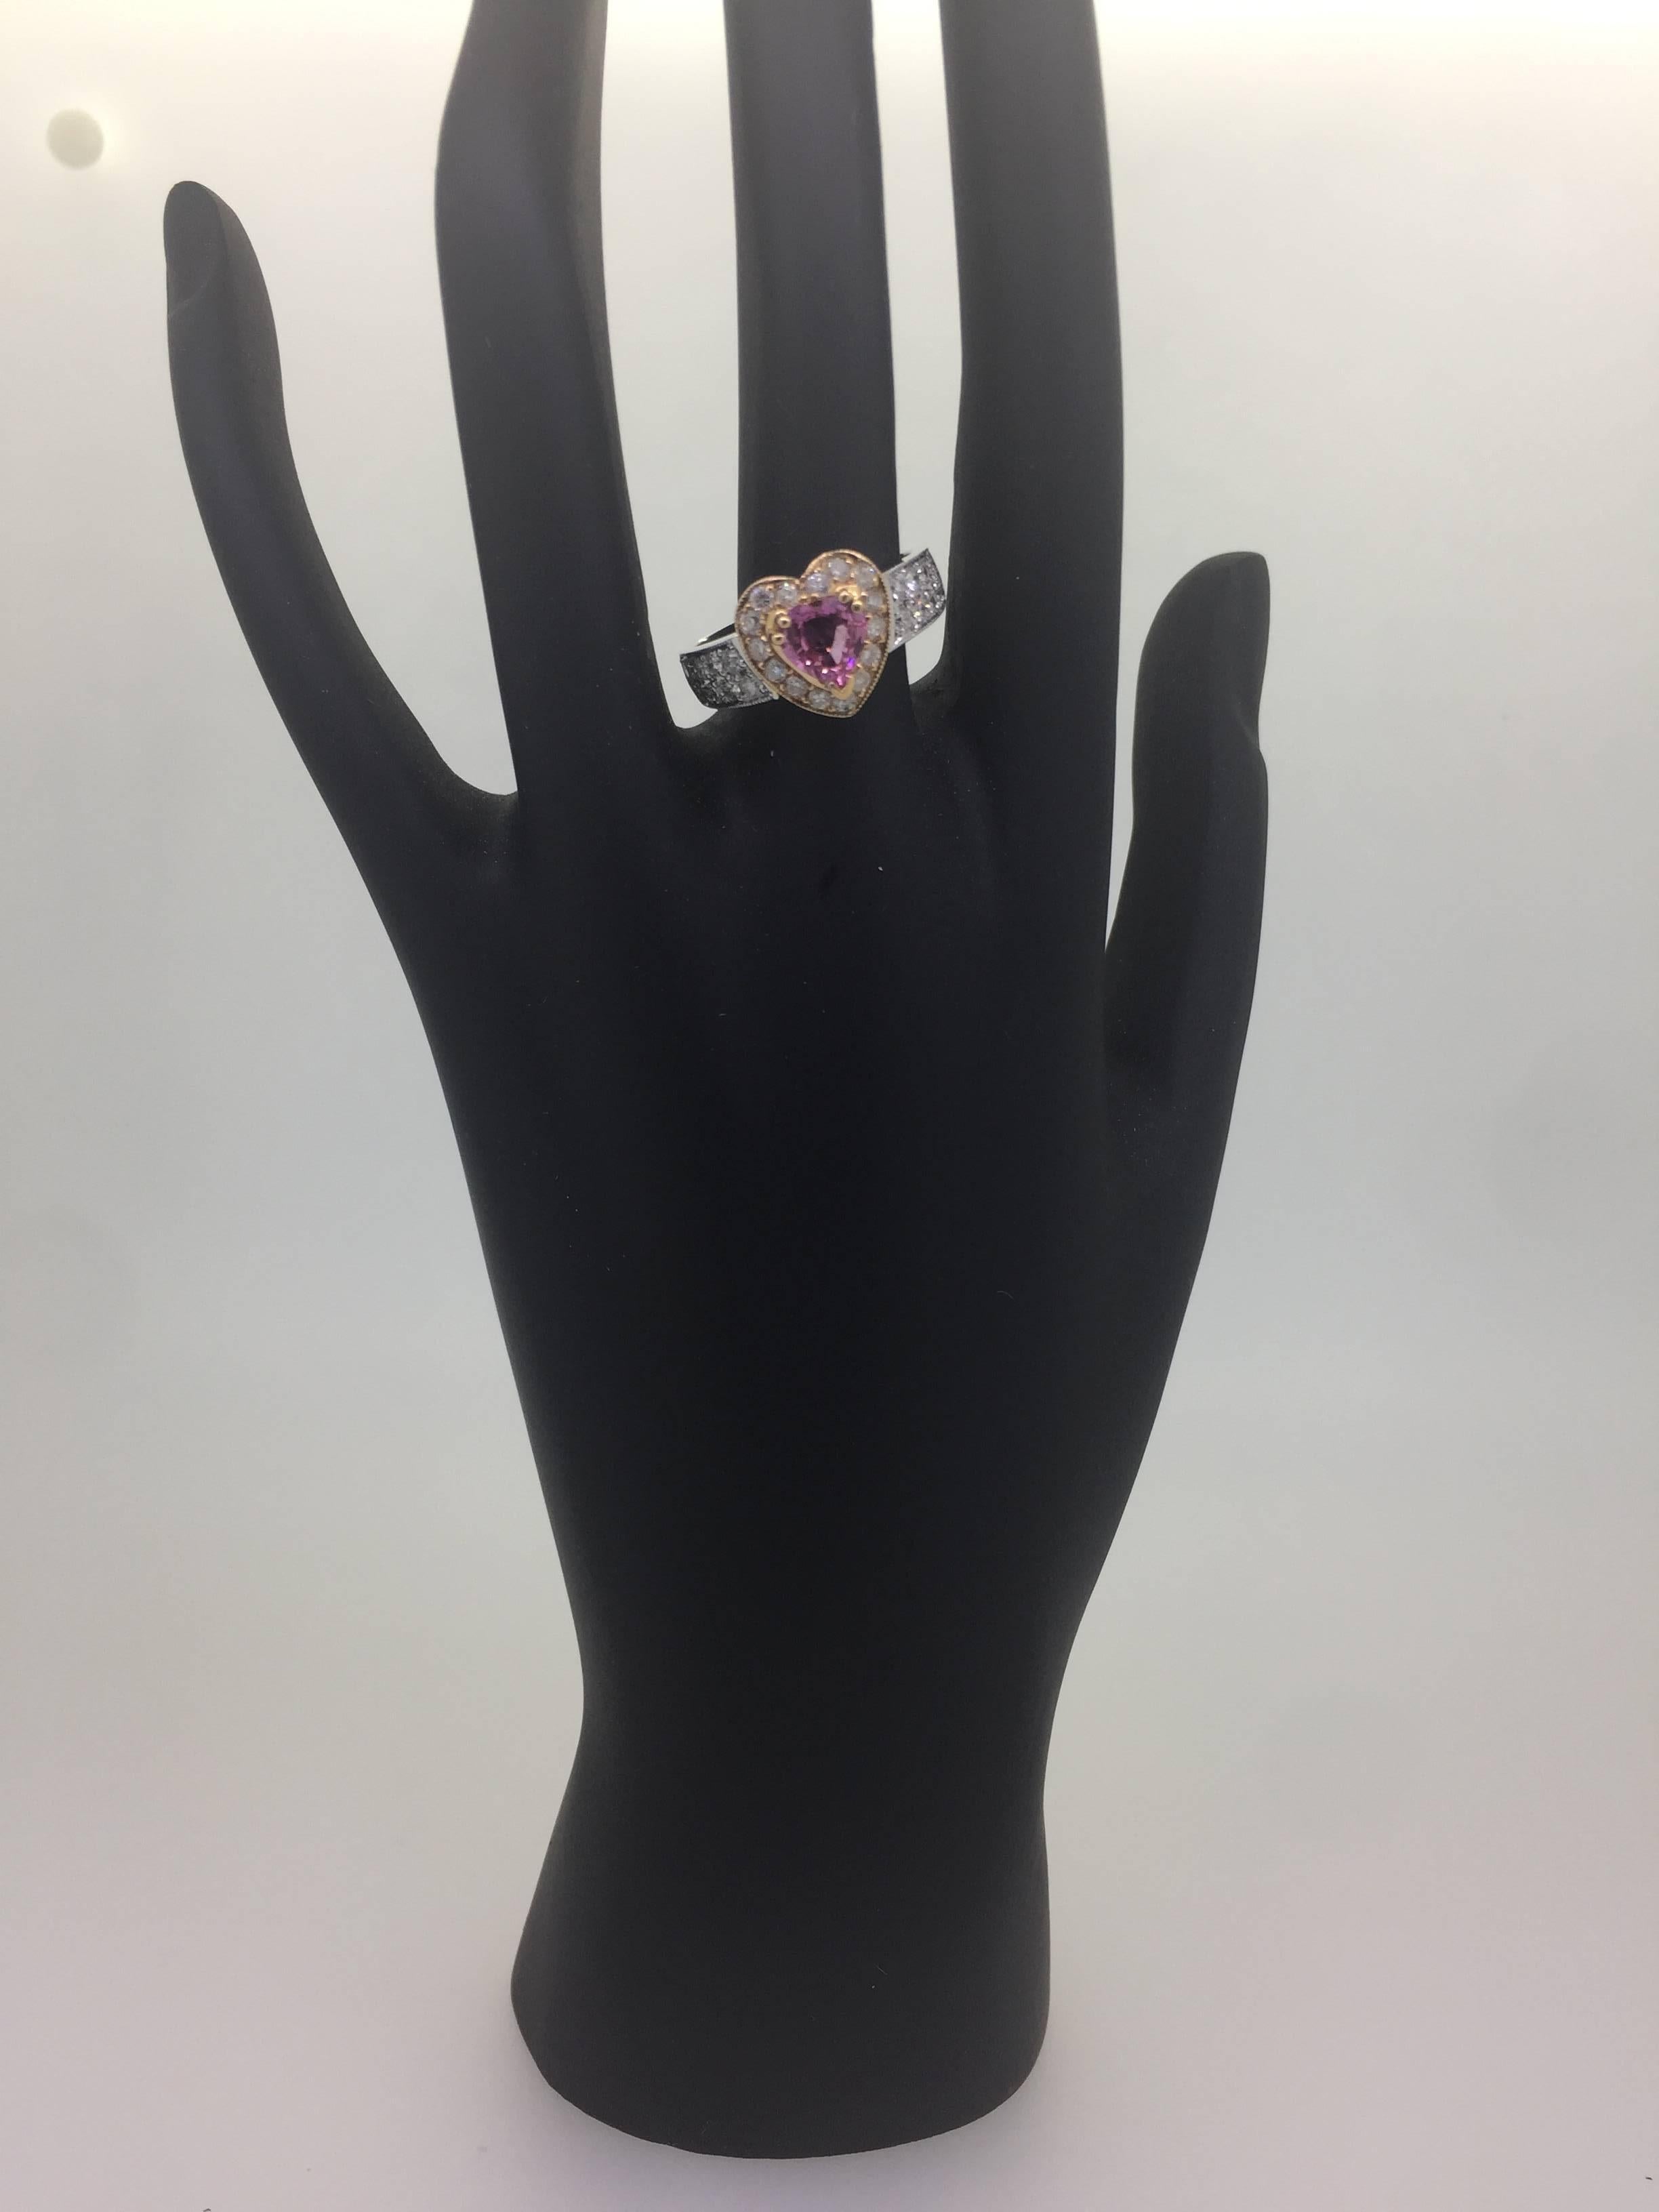 Modern 1.52 Carat Pink Sapphire Diamond Engagement Ring